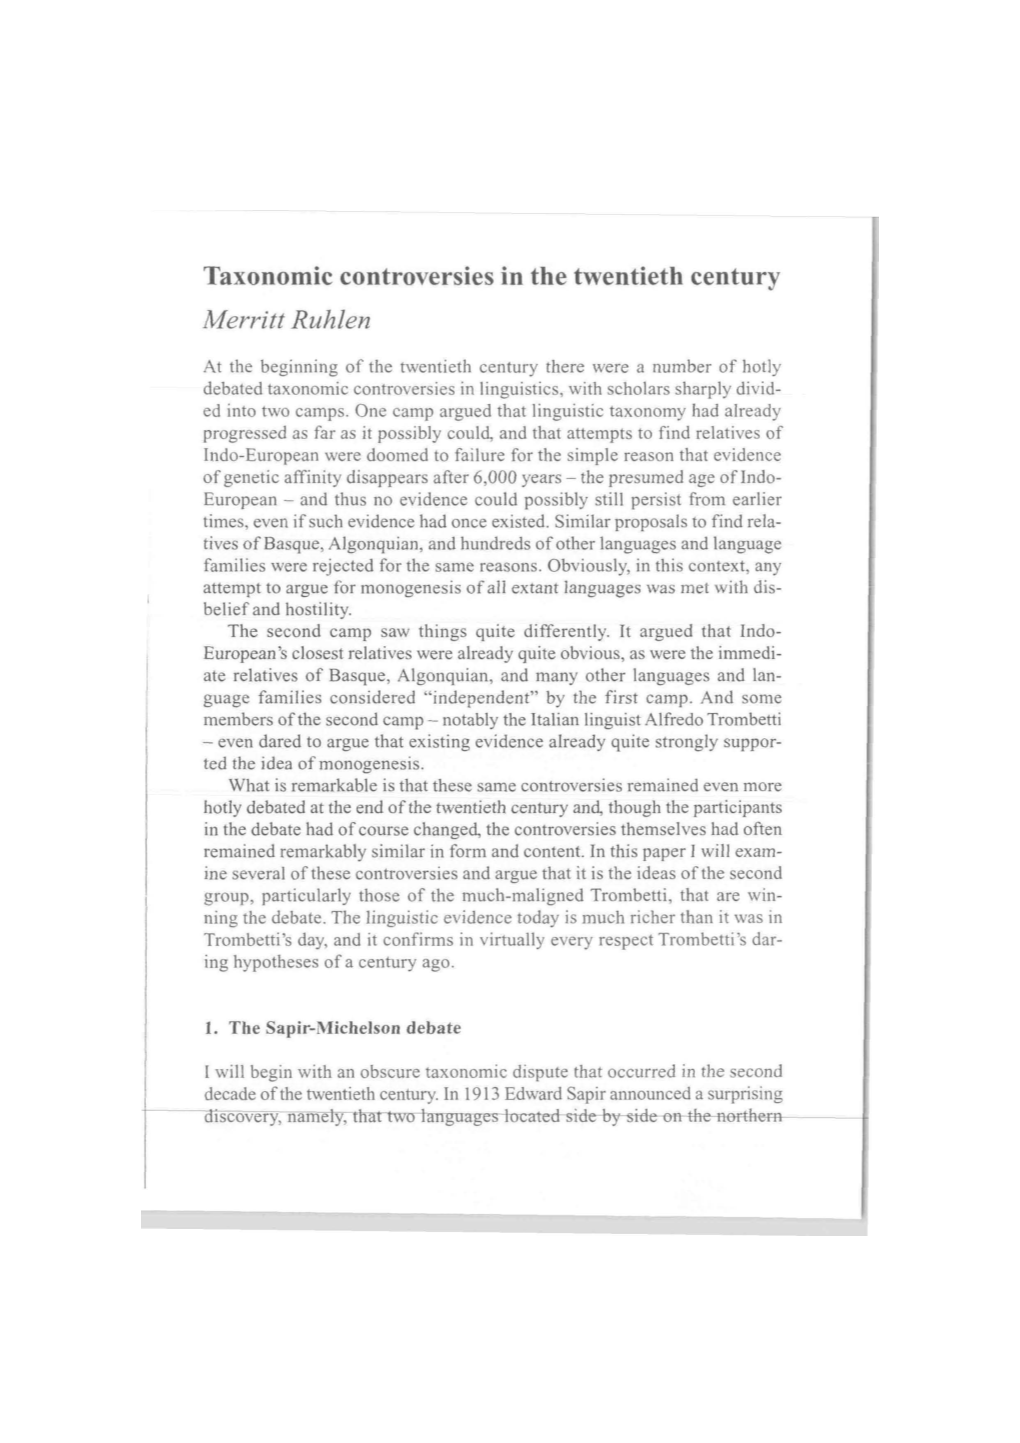 Taxonornic Controversies in the Twentieth Century Meneitt Ruh